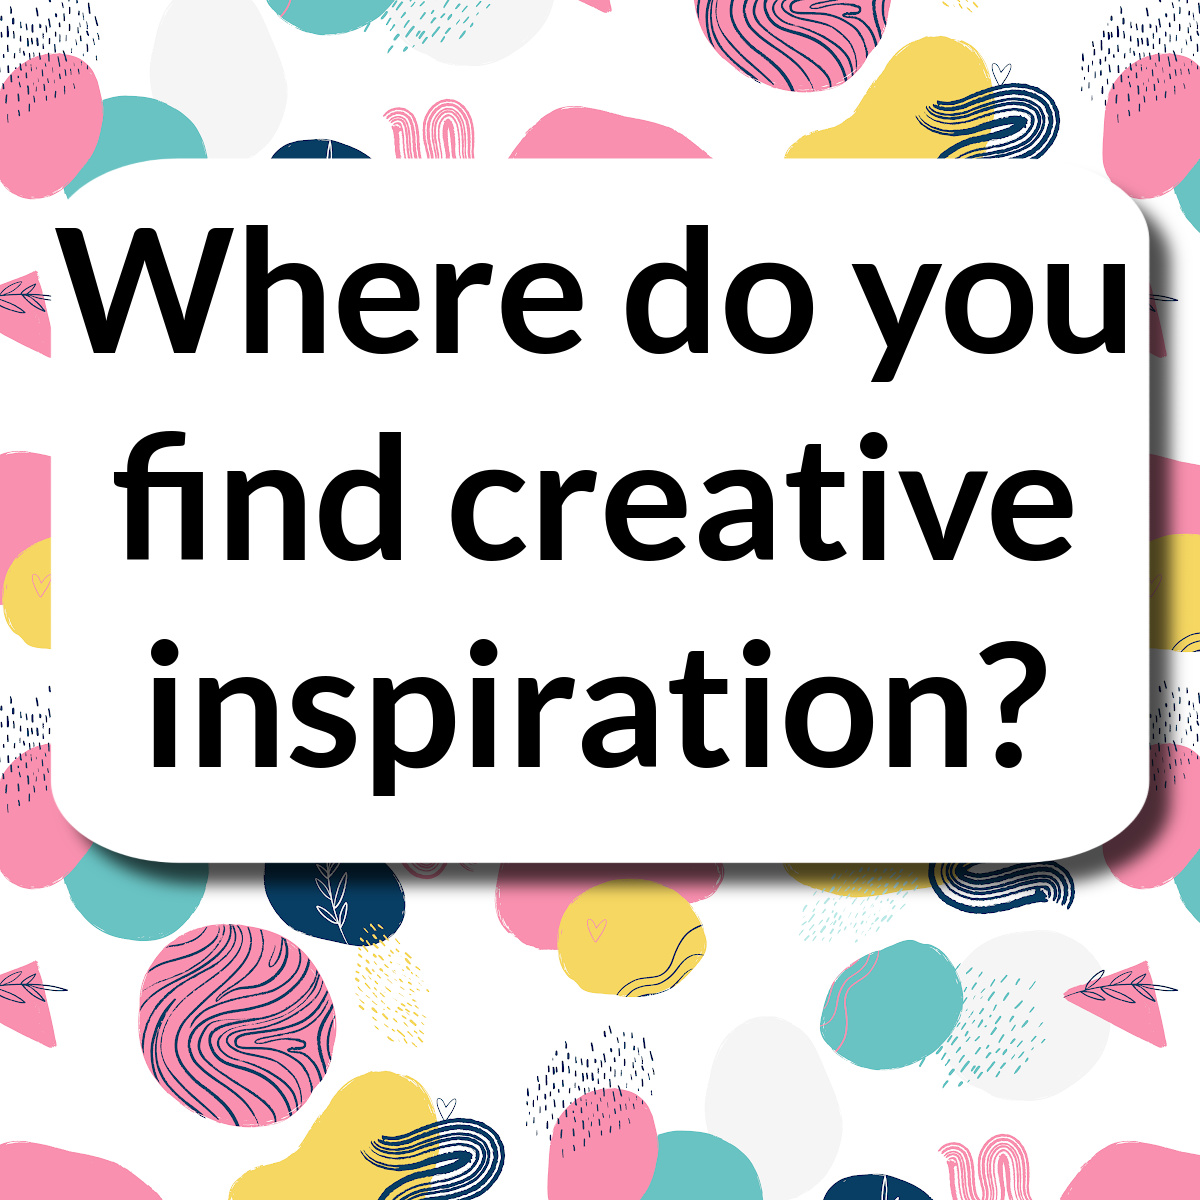 Where do you find creative inspiration?